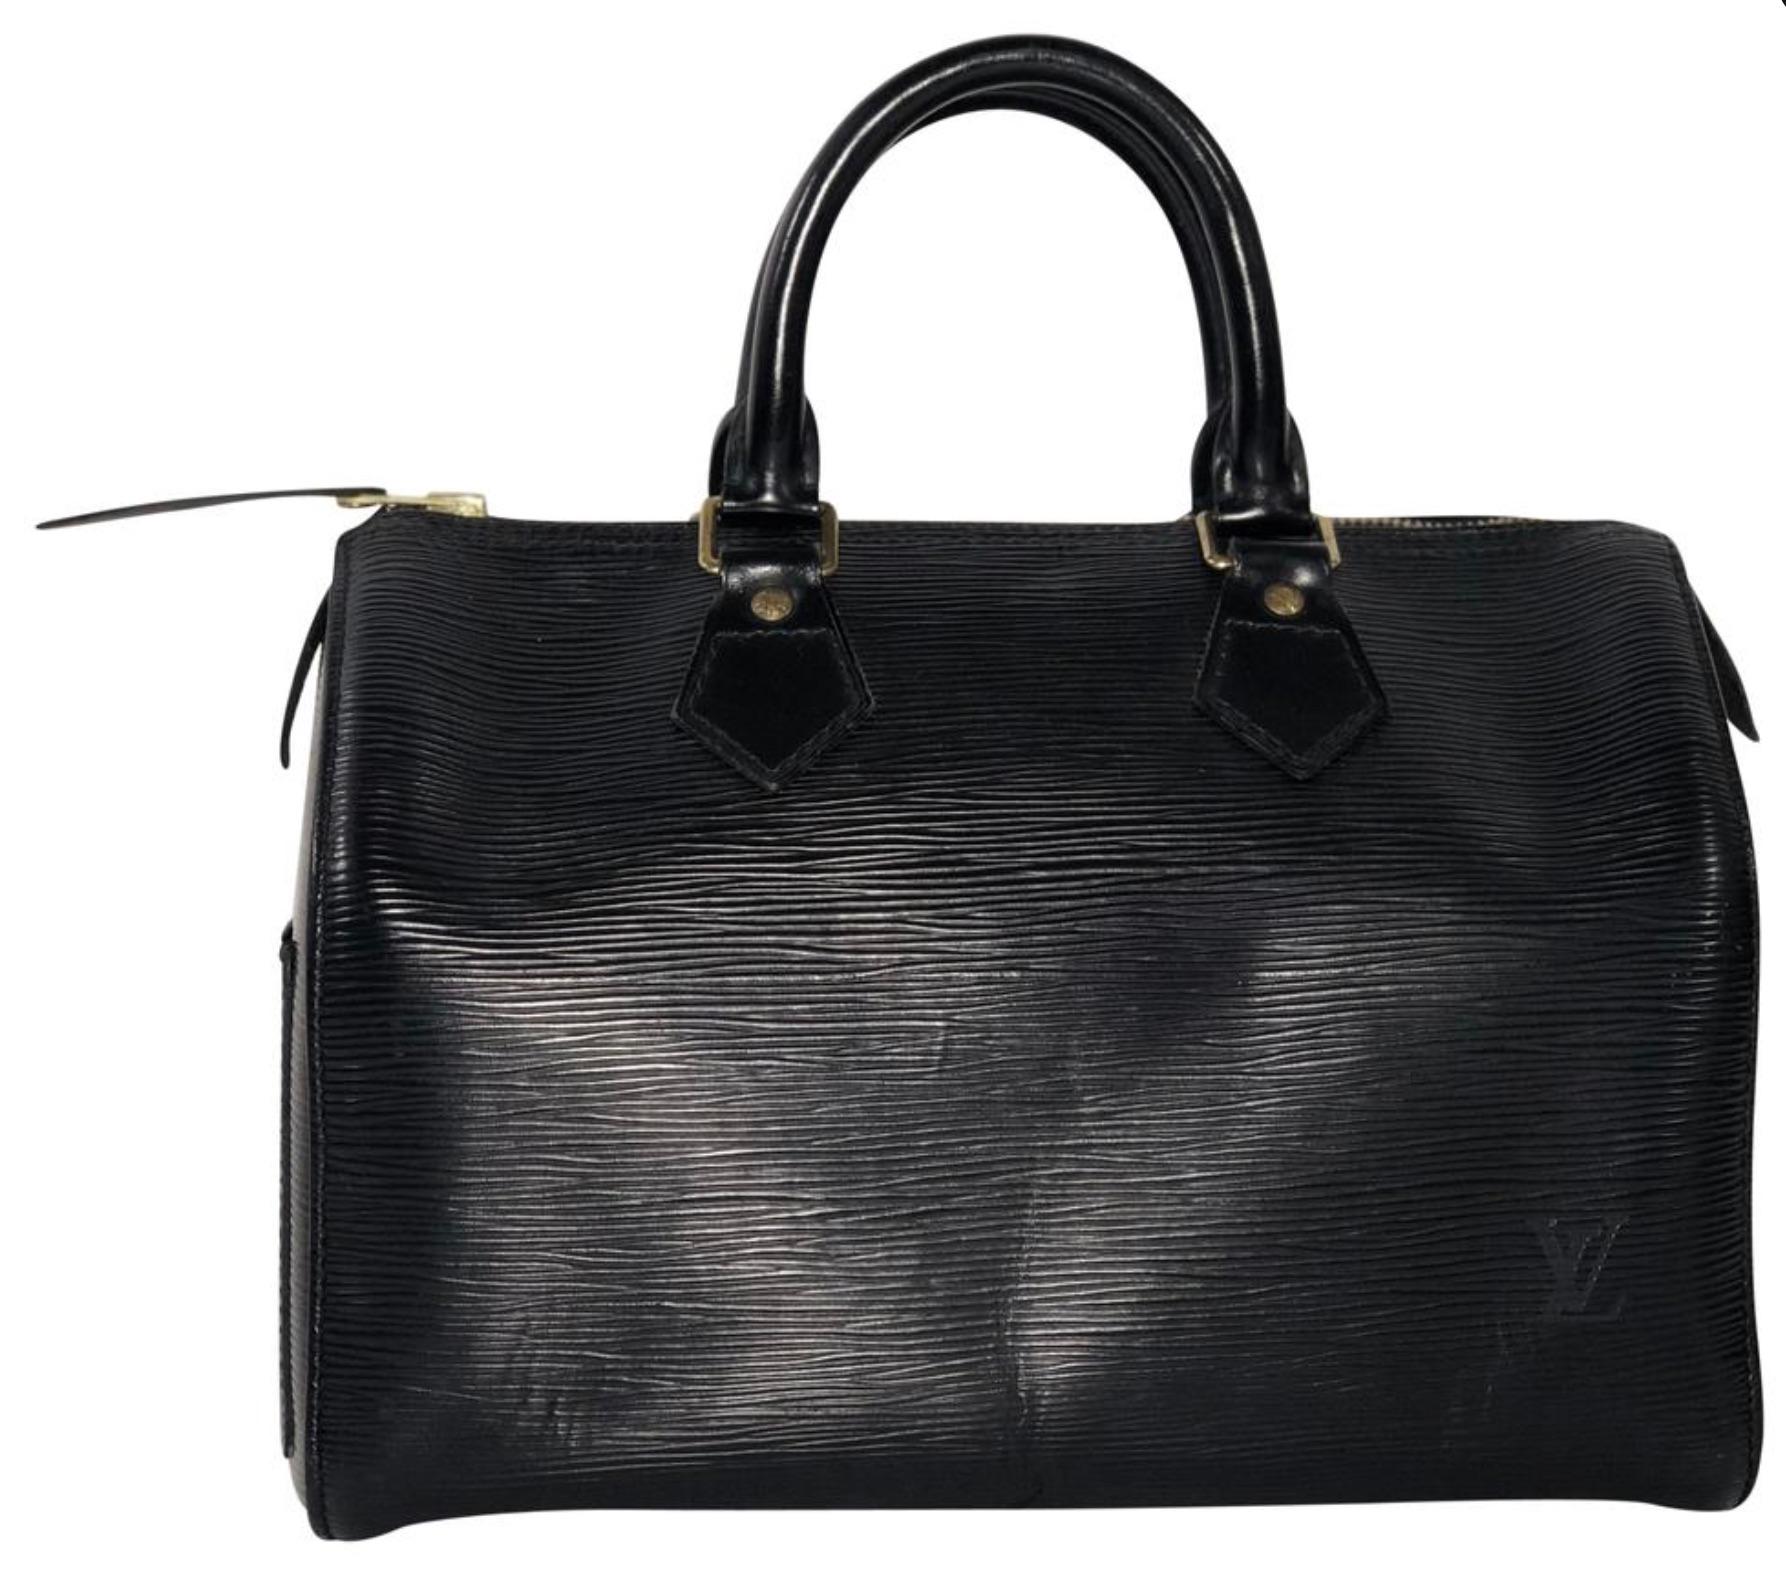 Louis Vuitton Epi Speedy 25 in Black Satchel Handbag For Sale